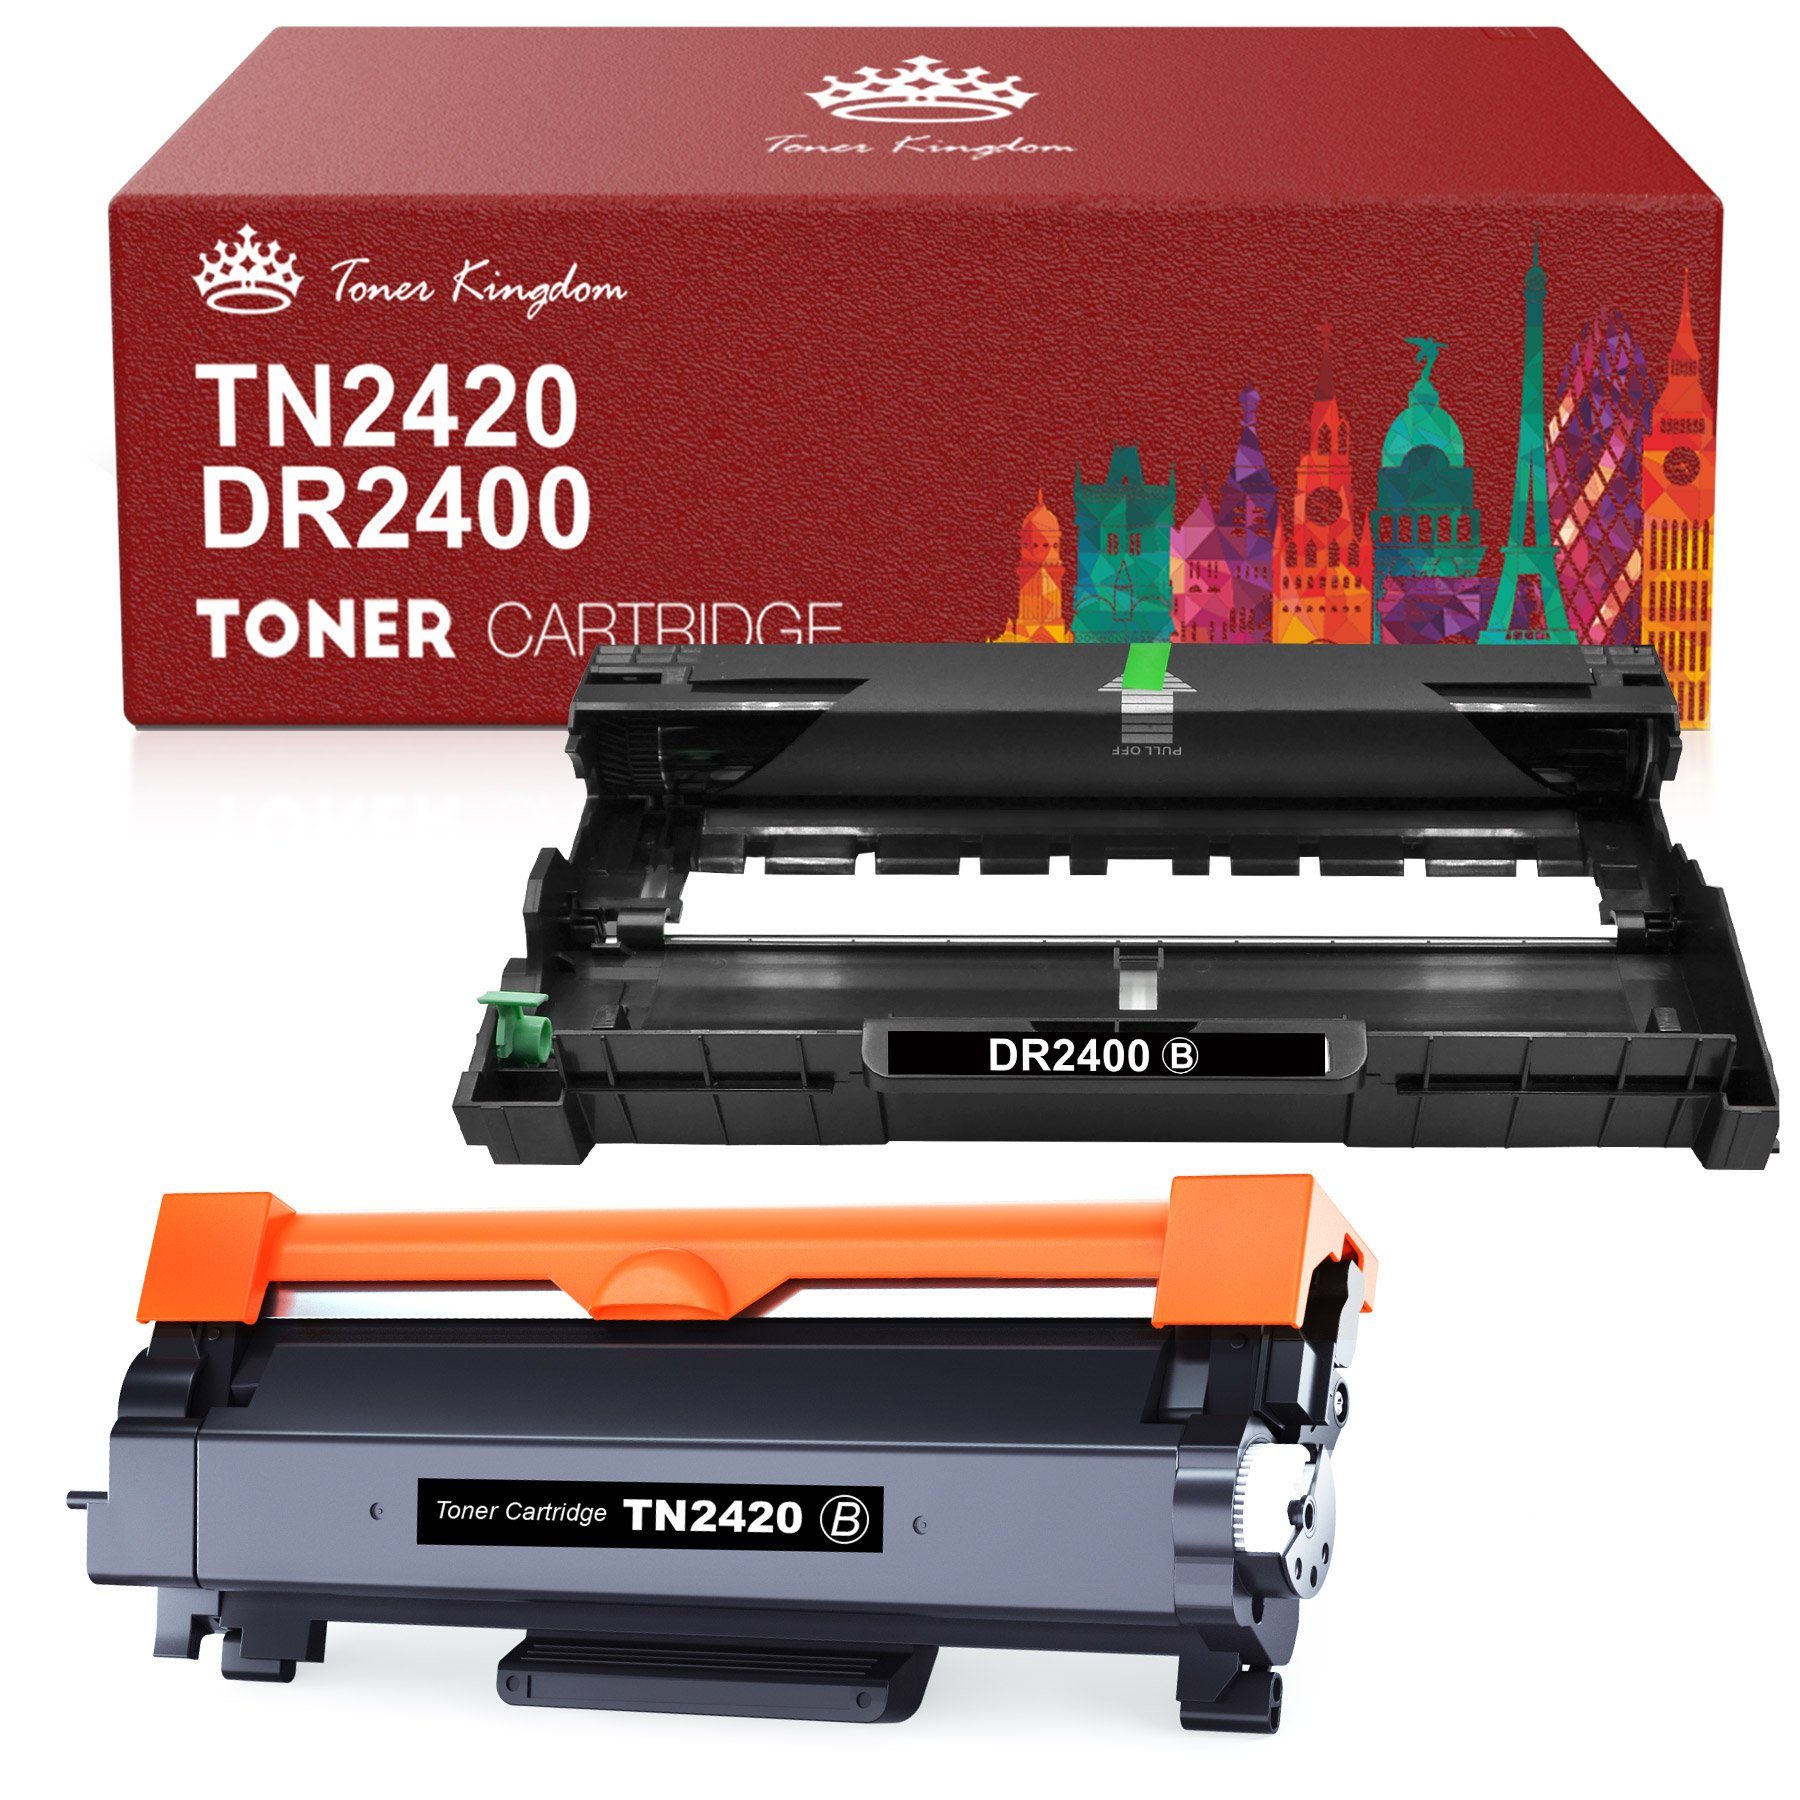 Toner Kingdom Tonerkartusche Trommel Brother Toner, für DCP-L2110 HL-L2310 TN-2420 (MFC-L2710 DCP-L2530 DCP-L2537 DCP-L2510 DR2400 DCP-L2550 HL-L2350), MFC-L2750 MFC-L2730